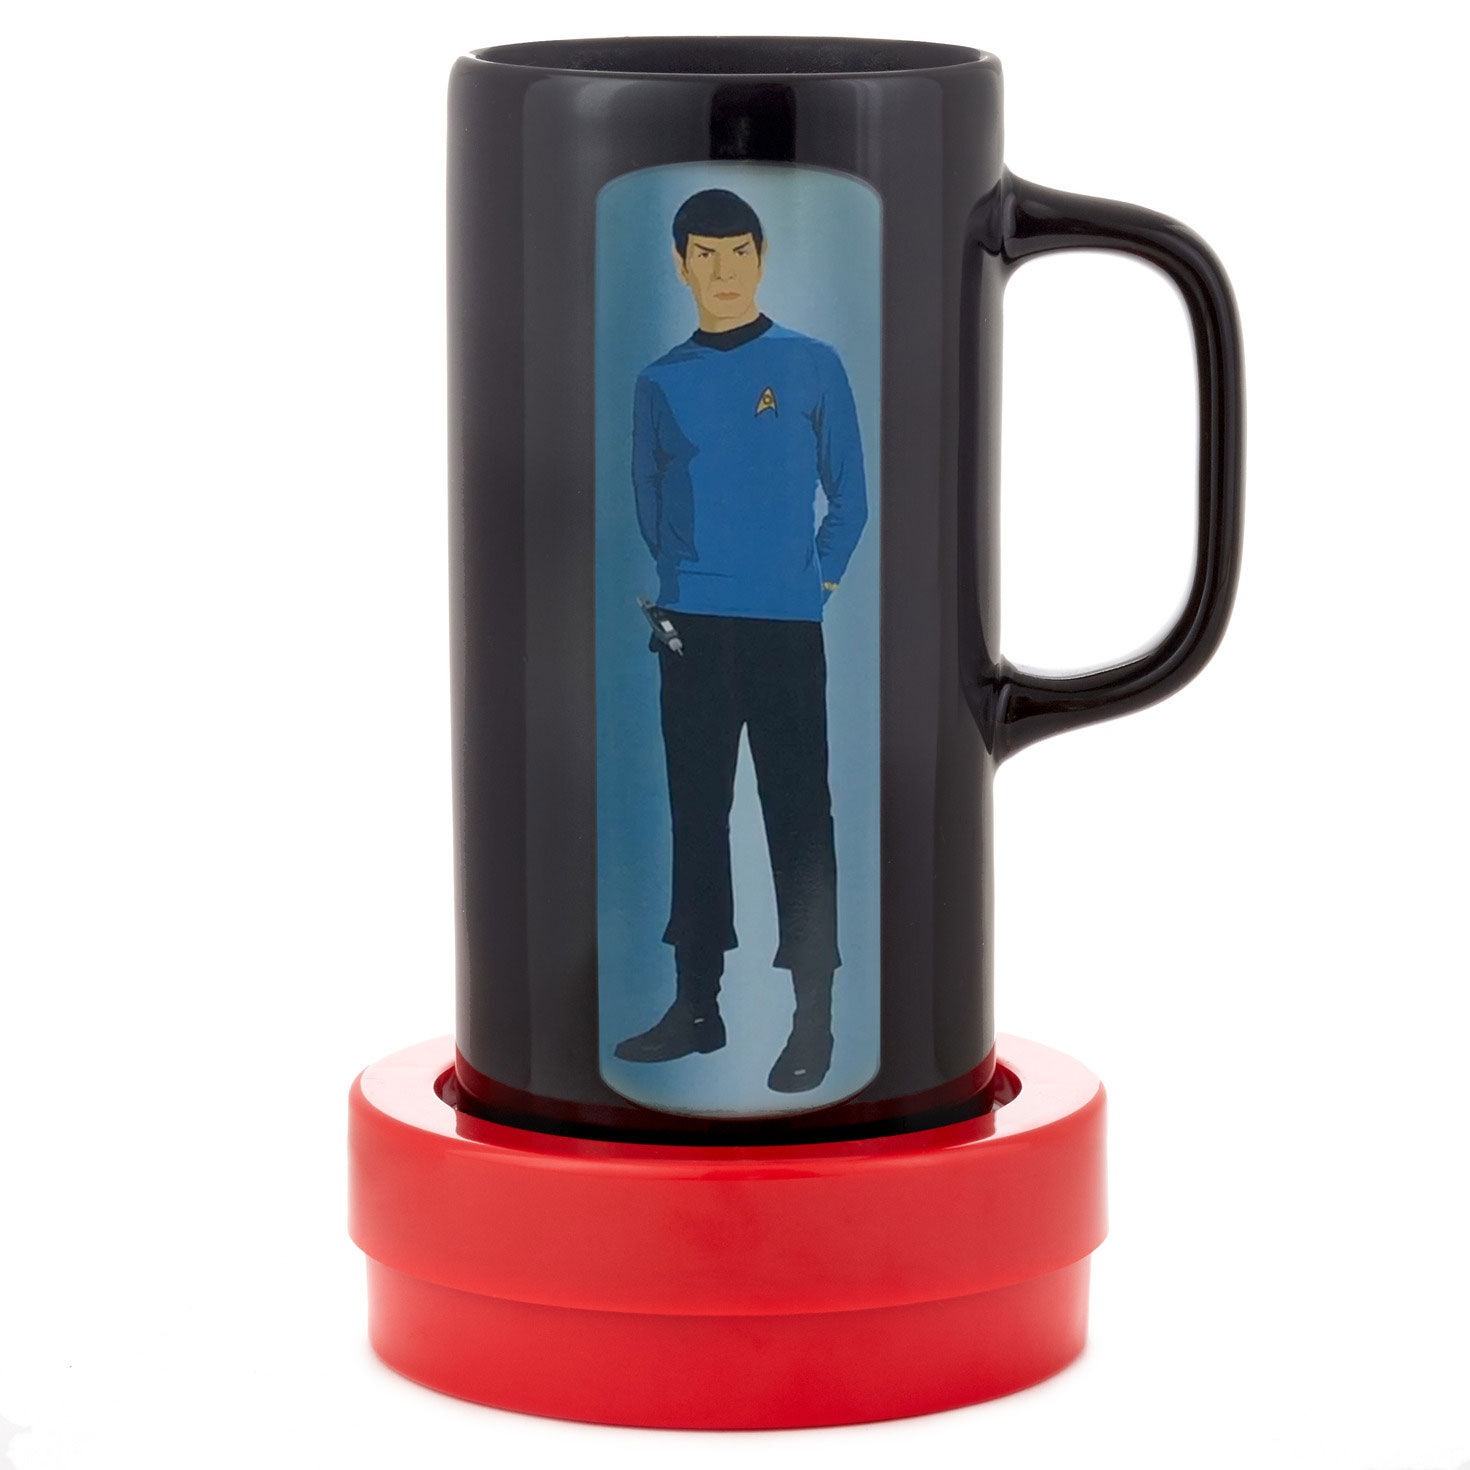 Star Trek Mug with retro sweets, Unique Gift Ideas, Star Trek Gifts